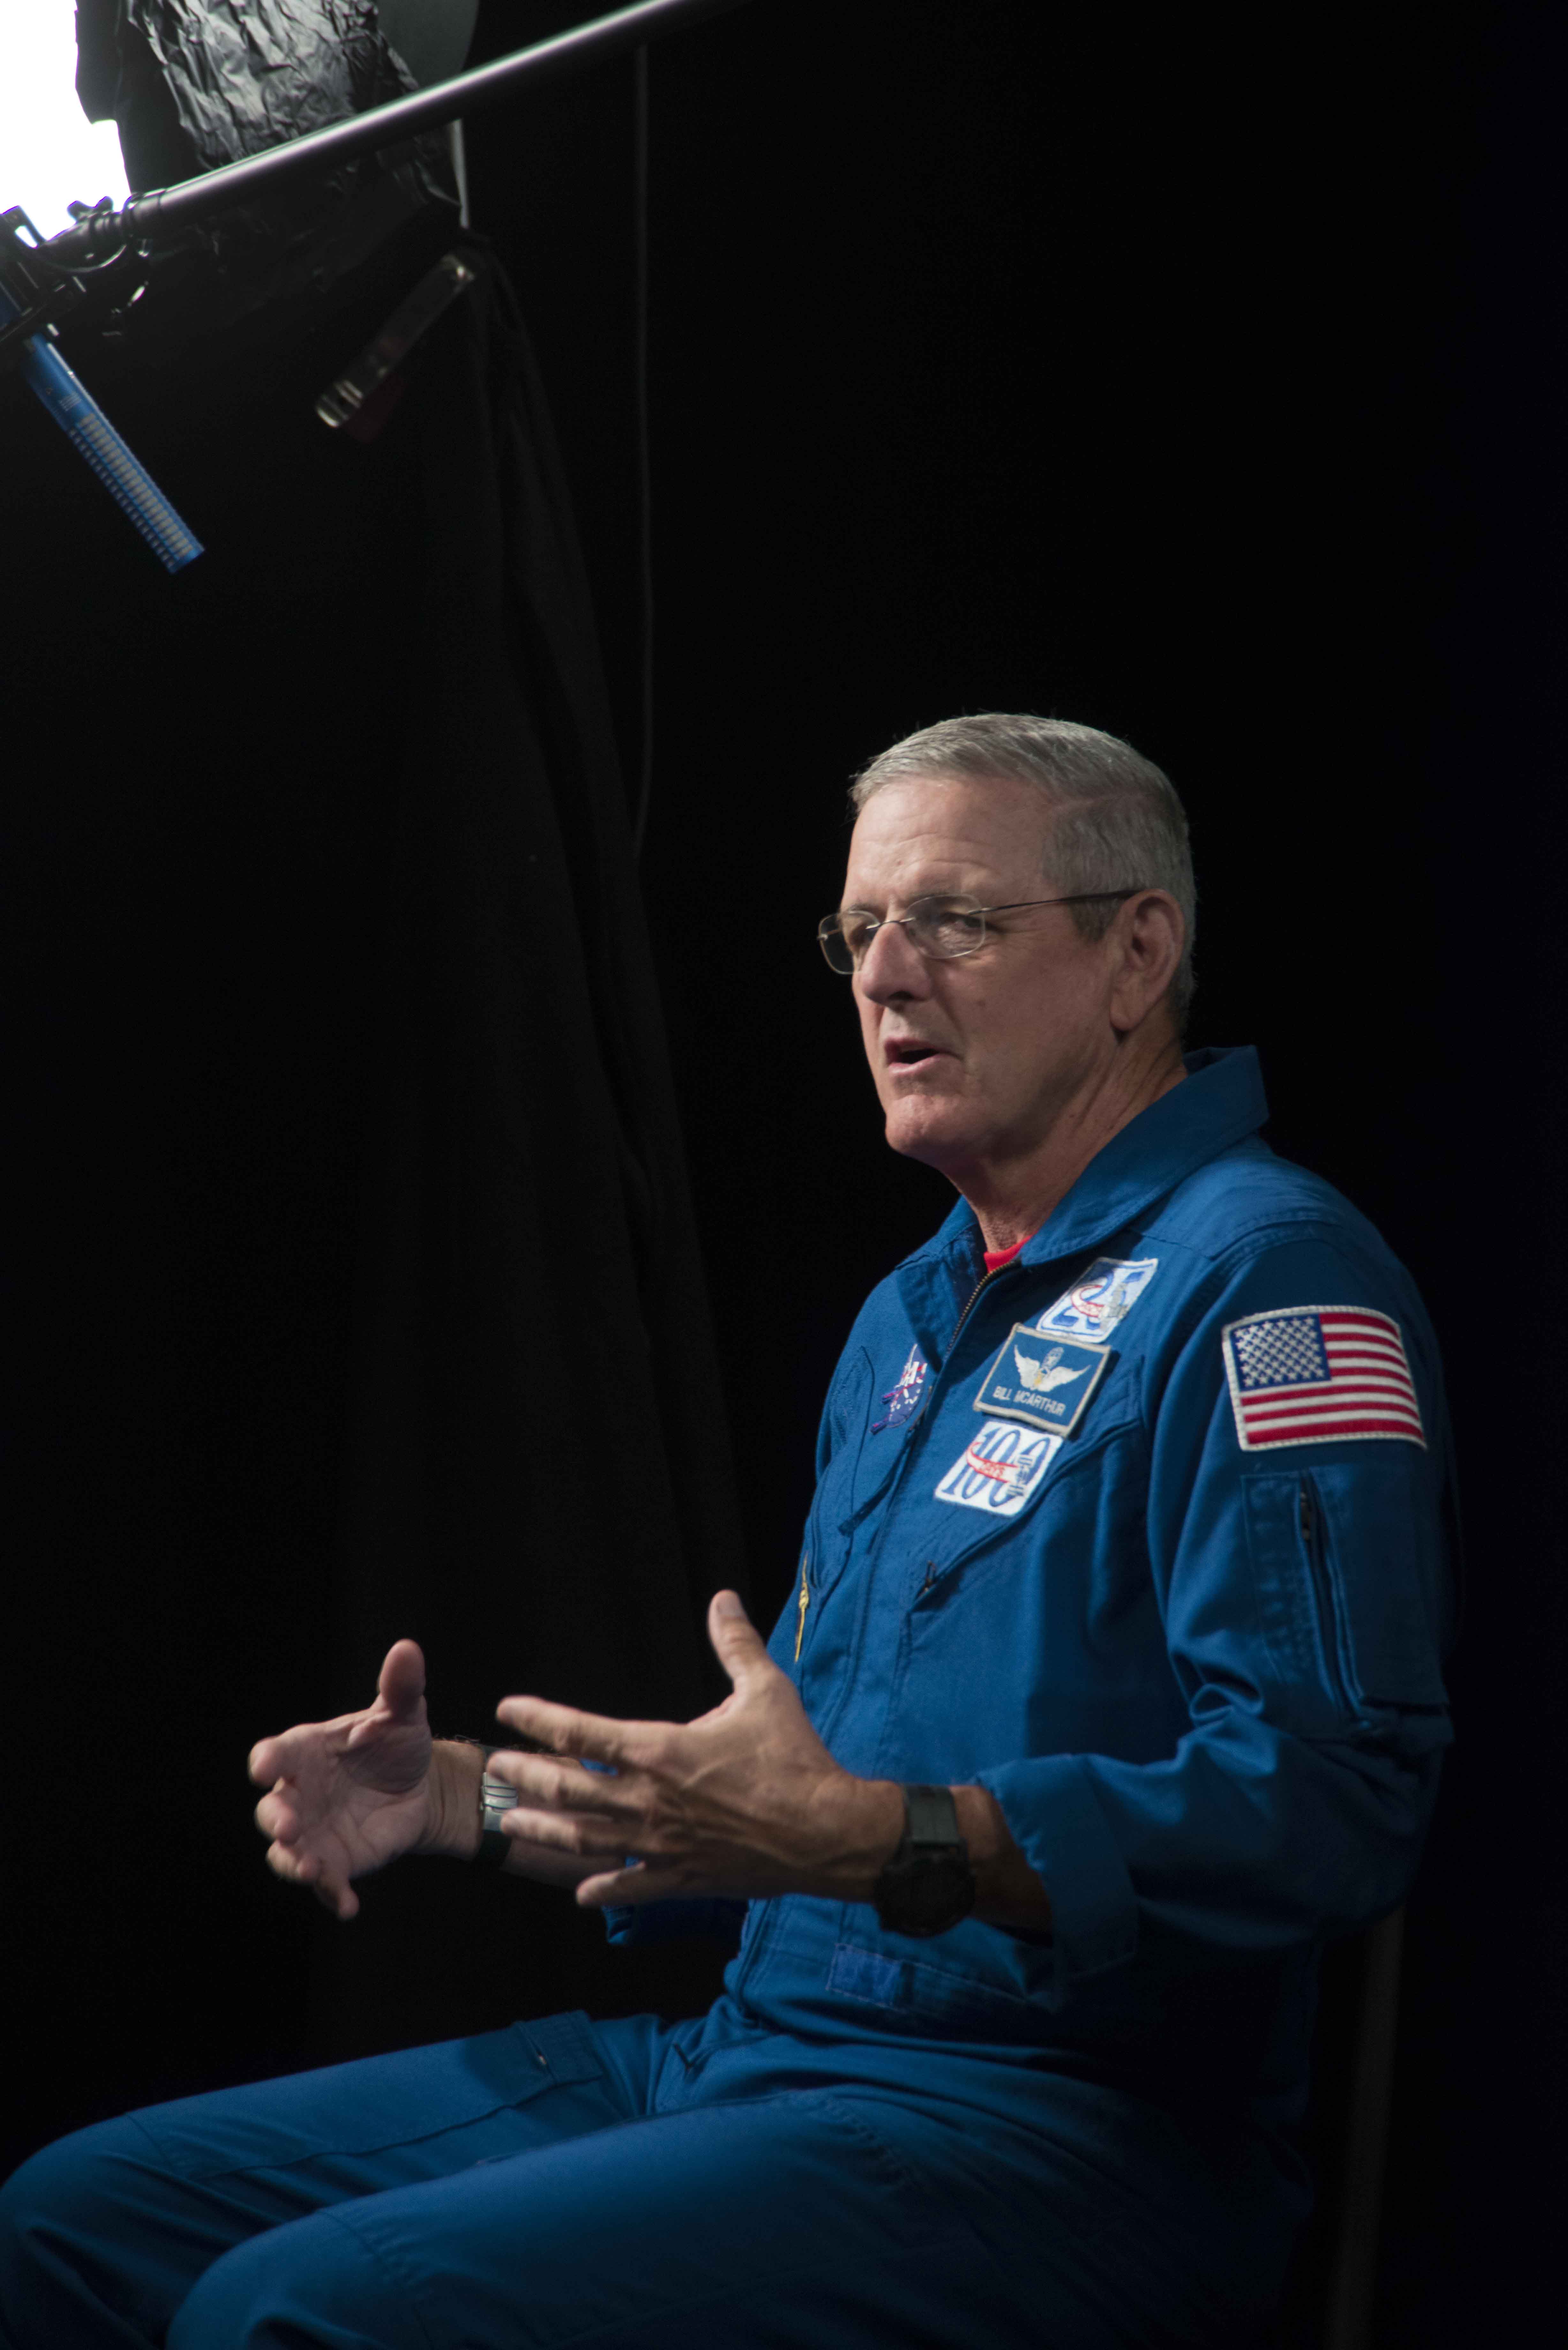 NASA astronaut (ret.) Bill McArthur